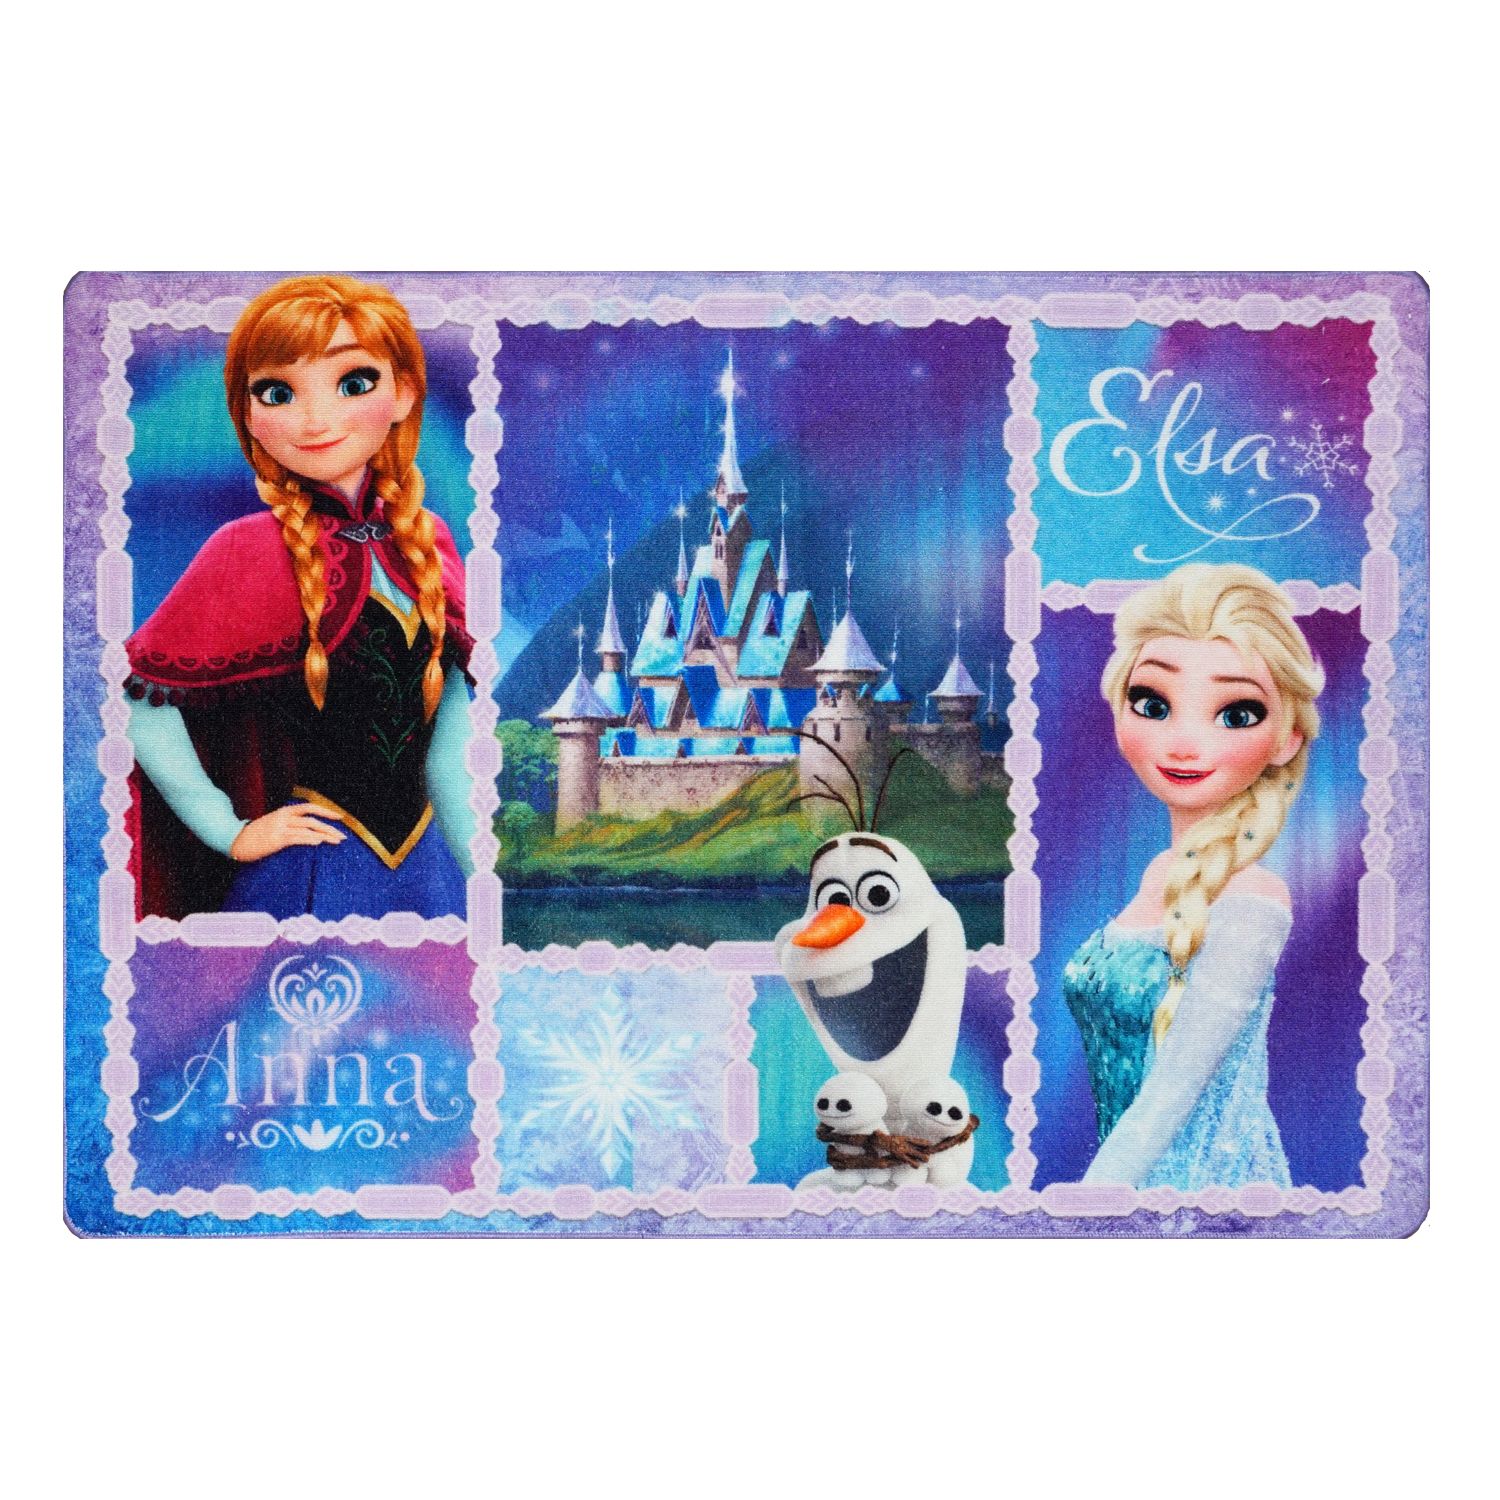 Image for Disney s Frozen Anna & Elsa Rug - 4'6" x 6'6" at Kohl's.